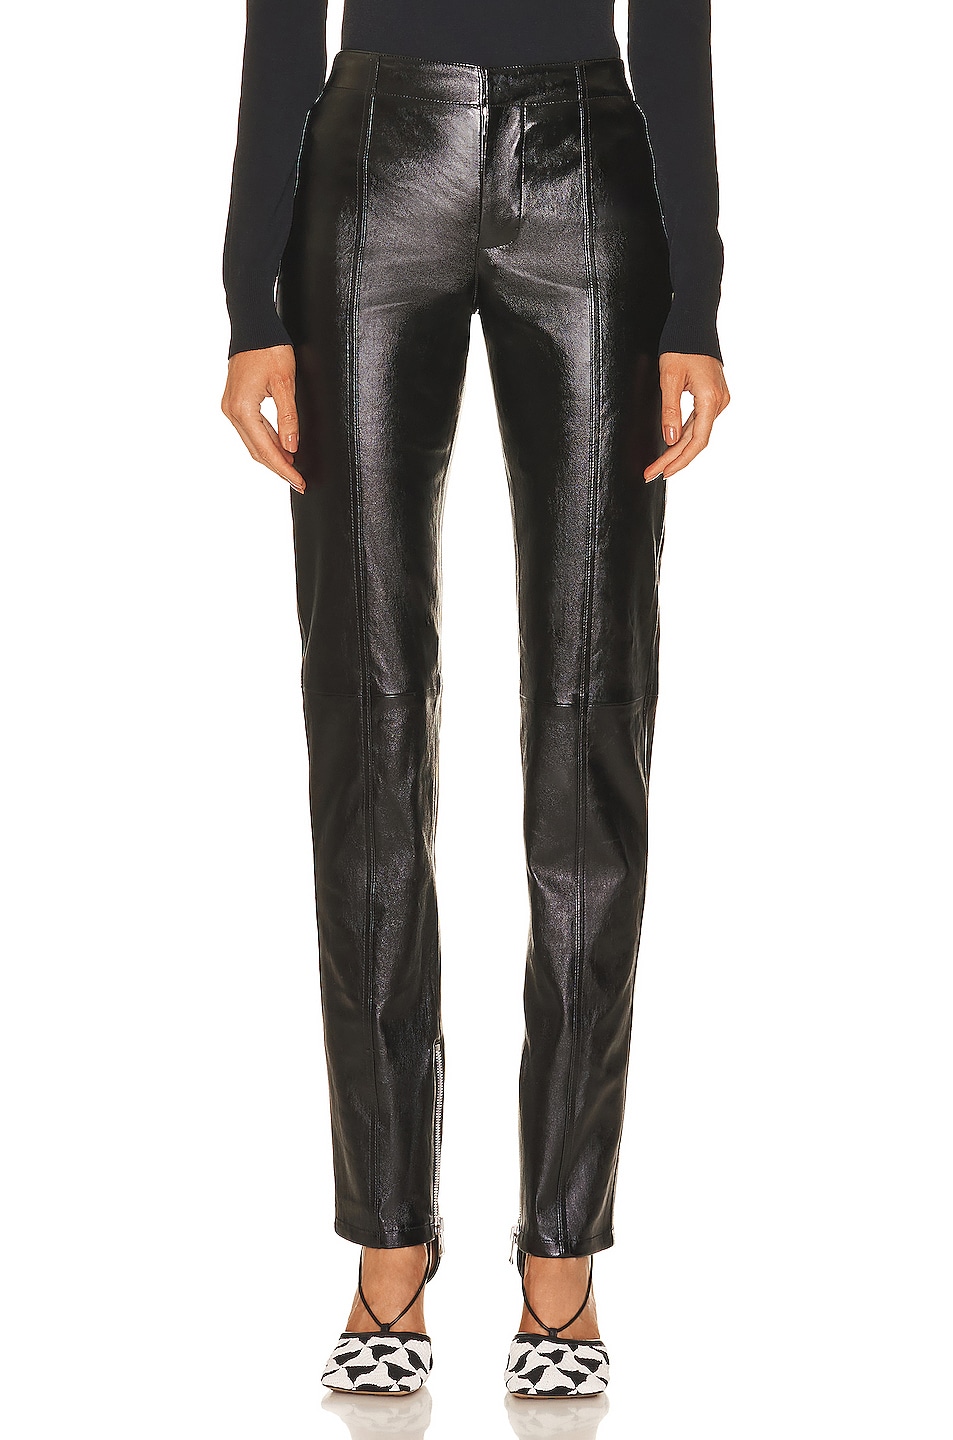 Bottega Veneta Stretch Shiny Leather Pants in Black | FWRD